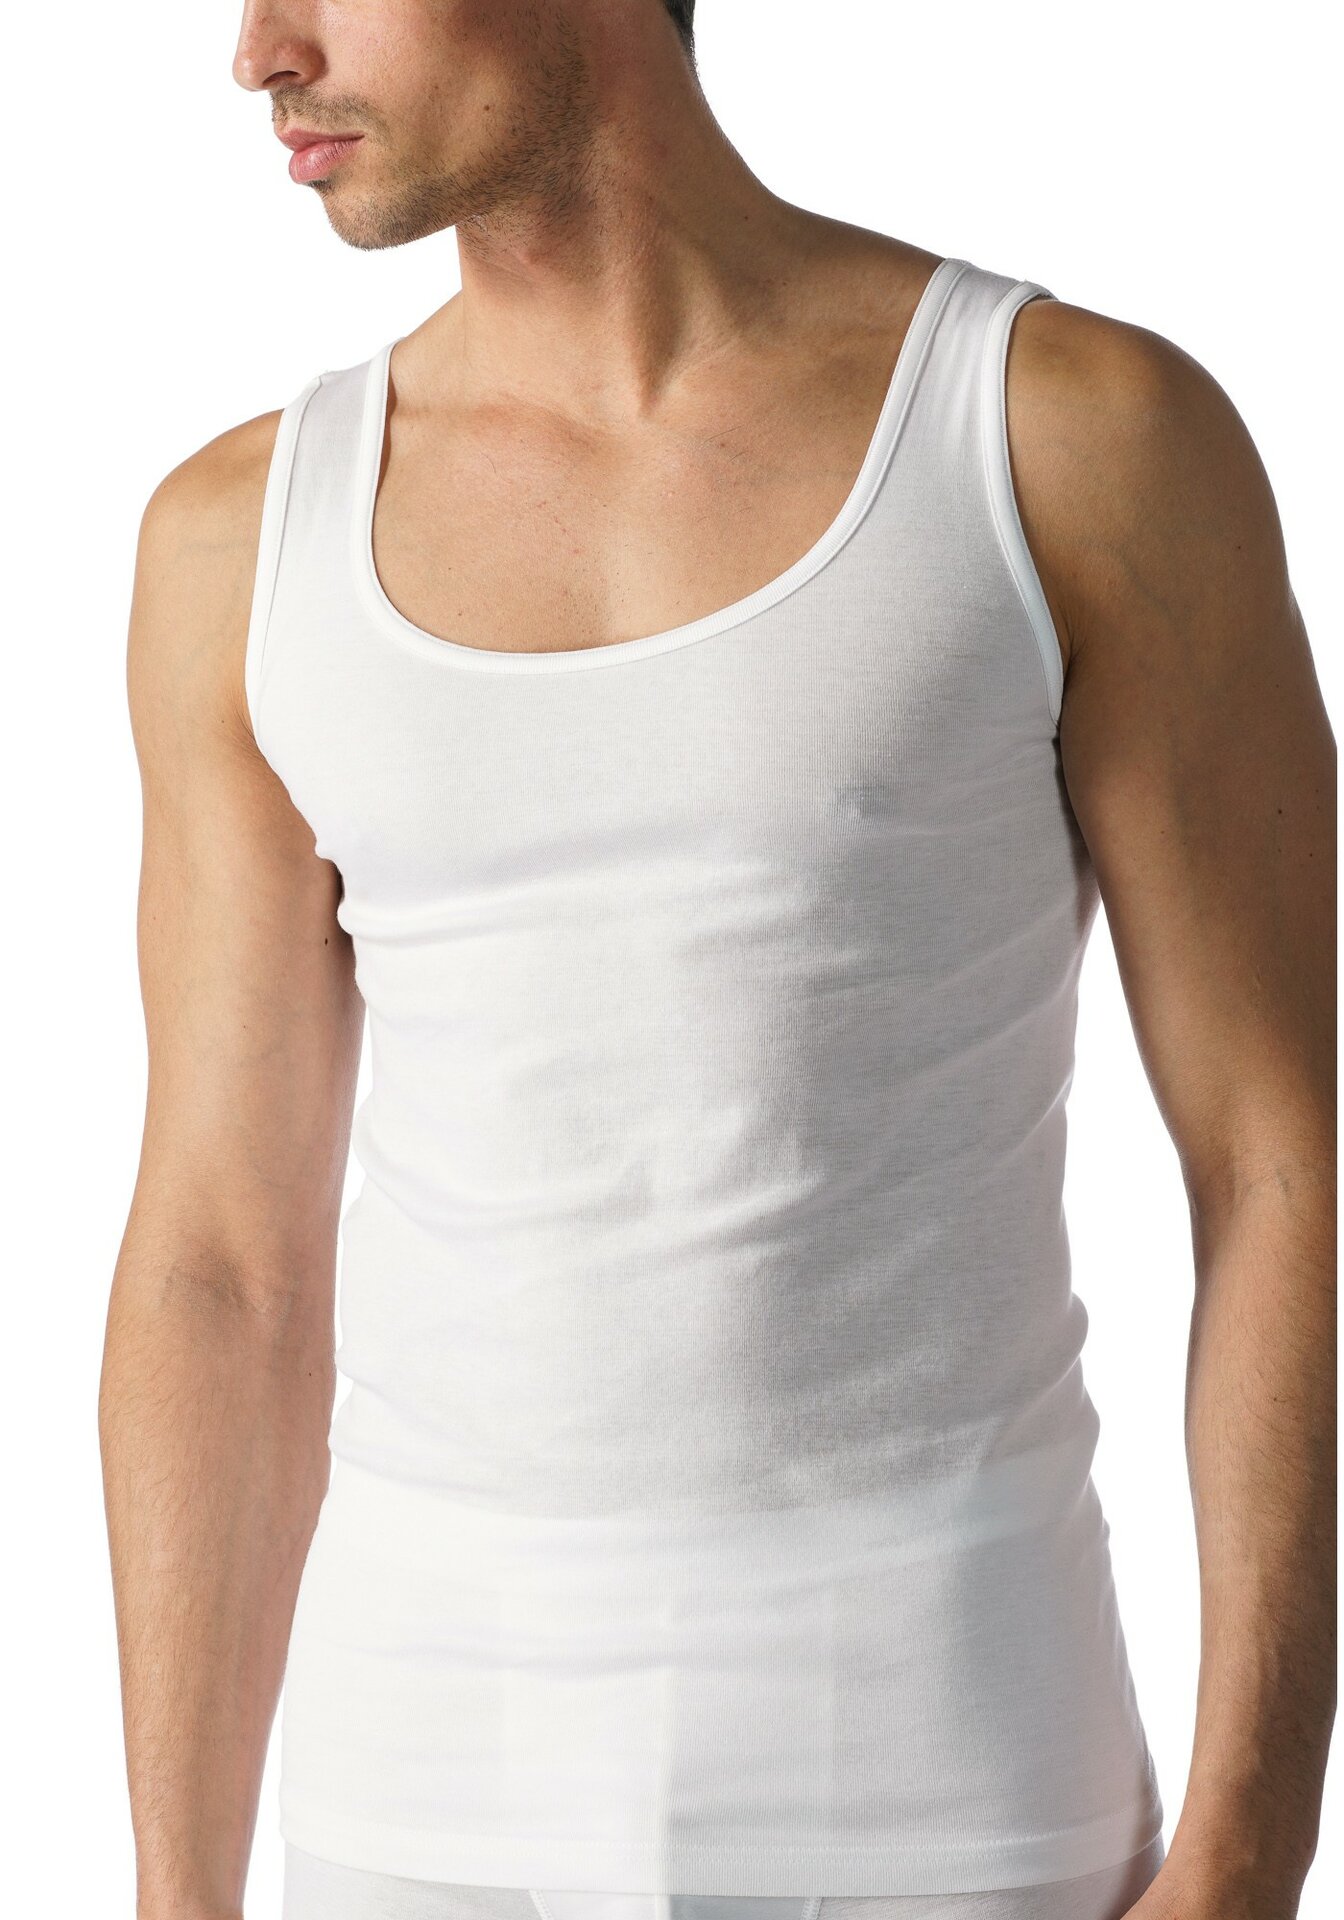 Mey Serie Casual Cotton Herren Athletic-Shirt